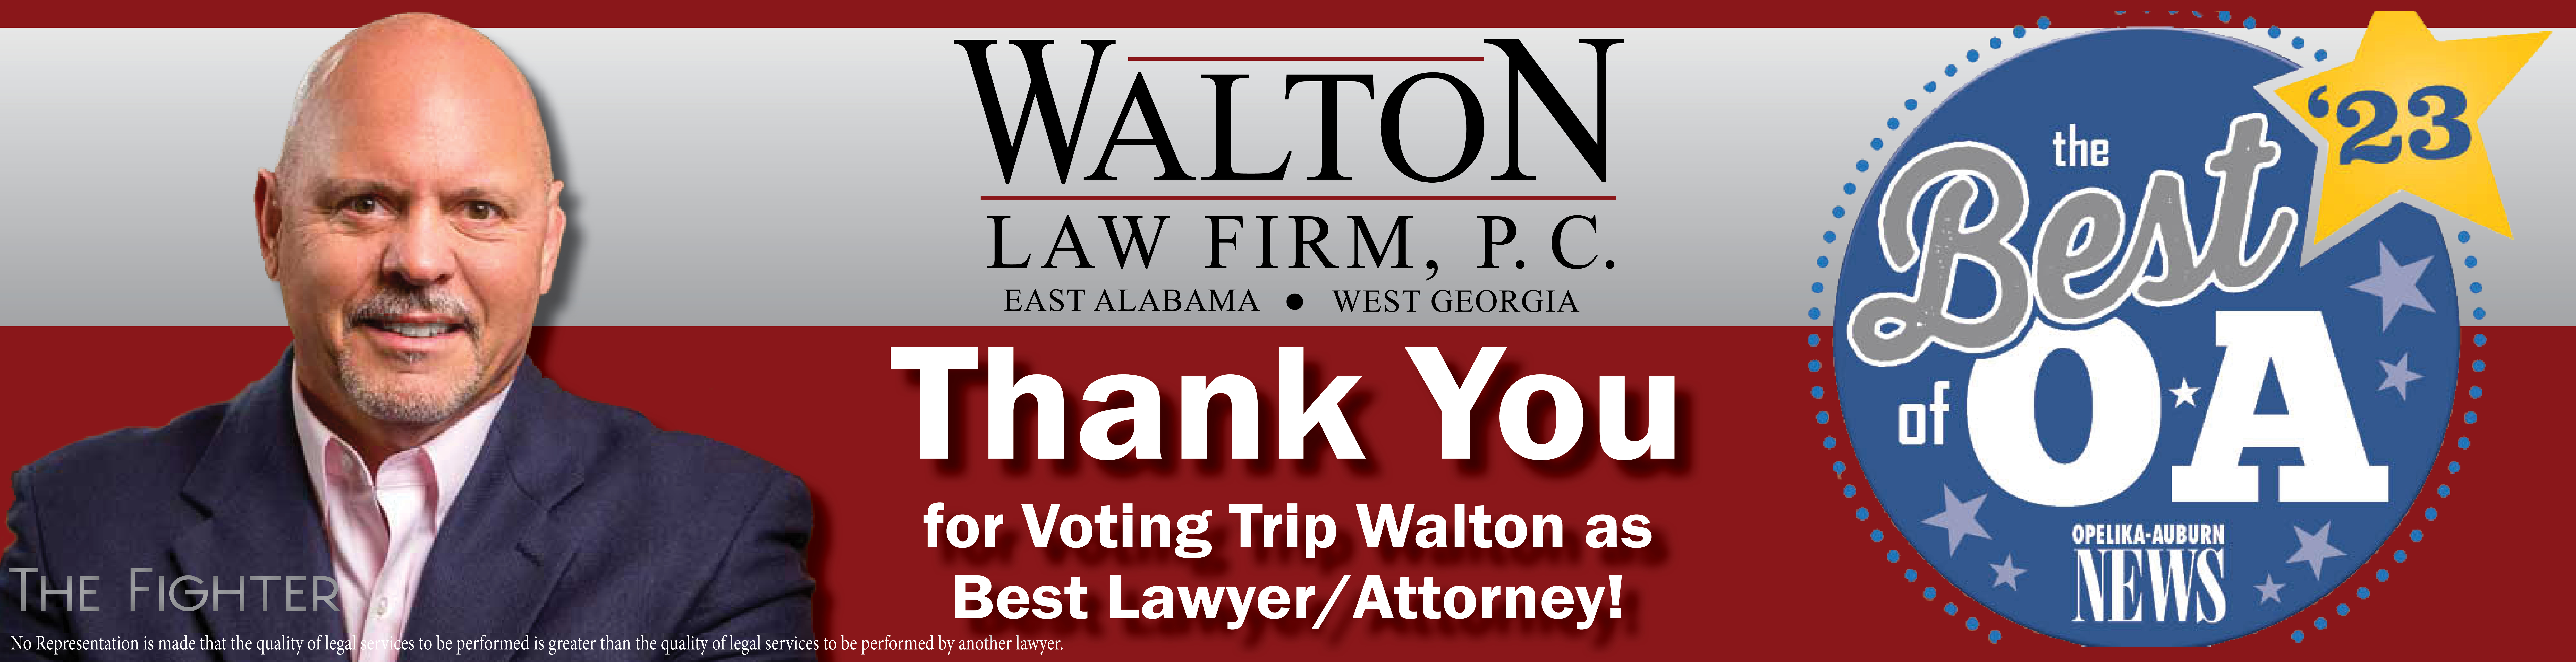 Trip Walton Voted Best Lawyer / Attorney People’s Choice Award Opelika Auburn News 2023